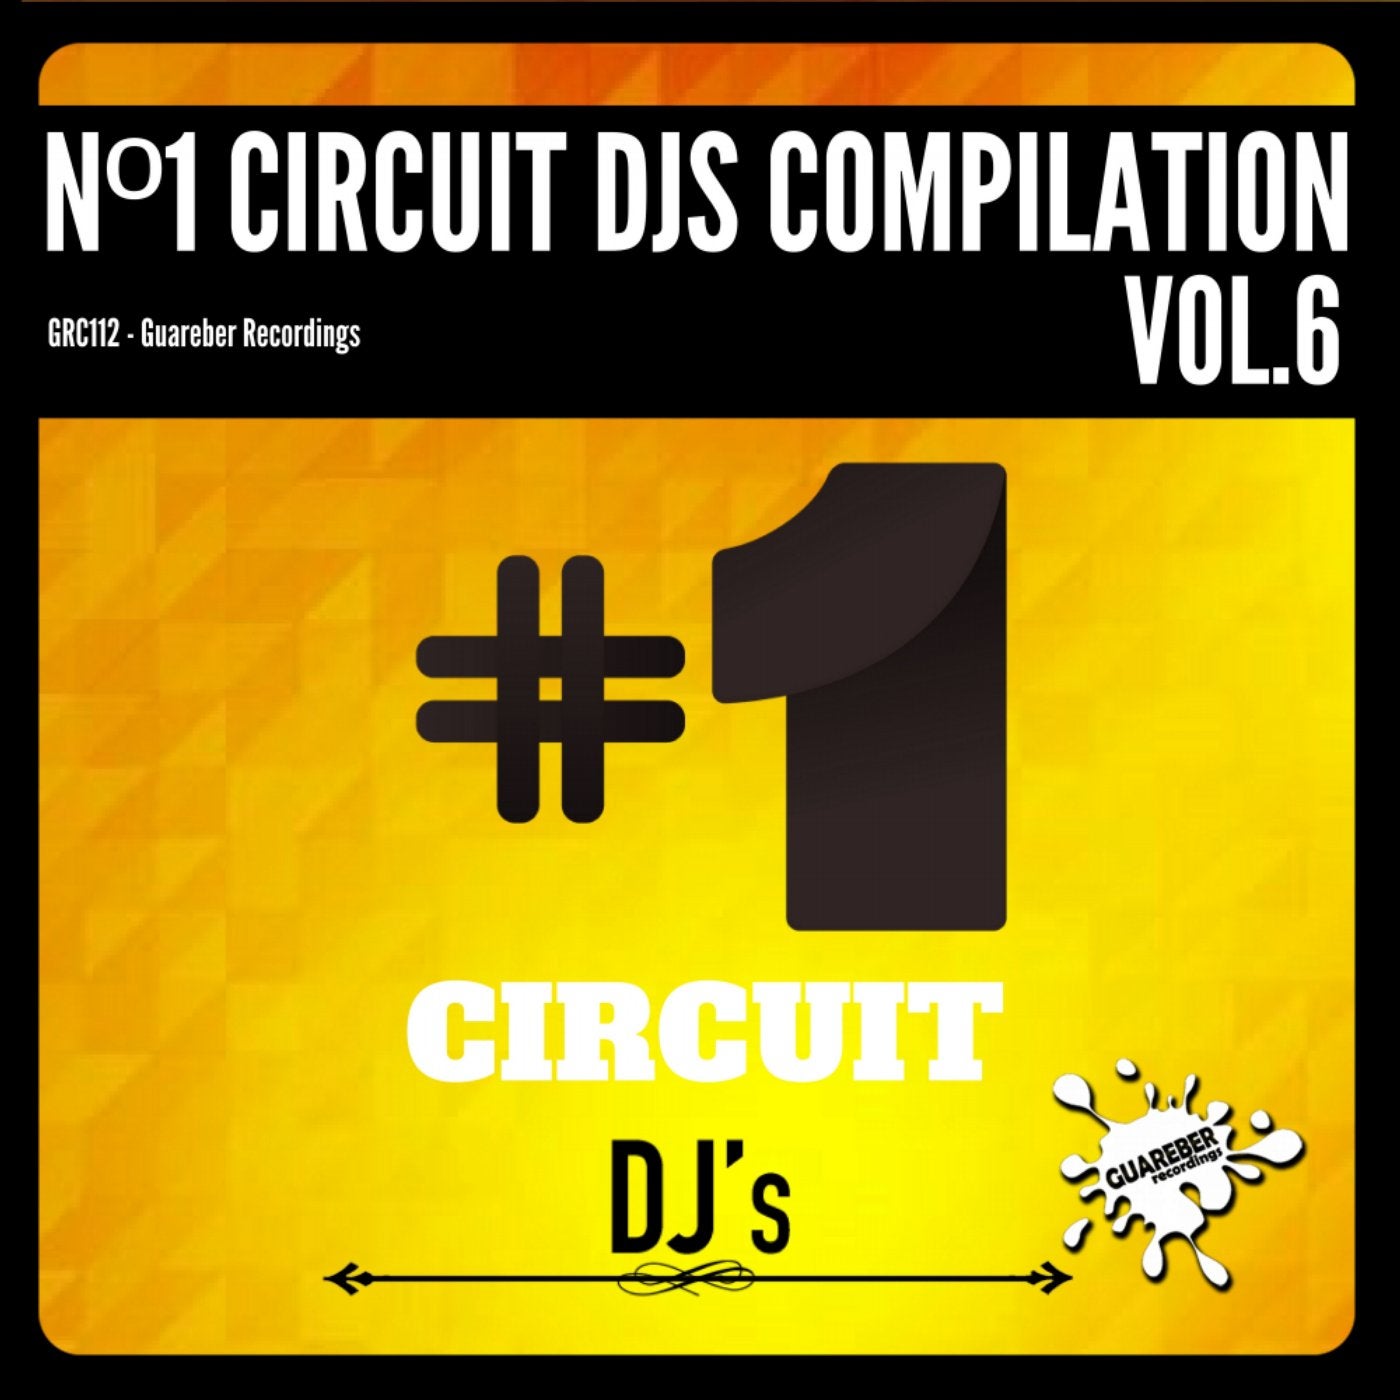 Nº1 Circuit Djs Compilation, Vol. 6